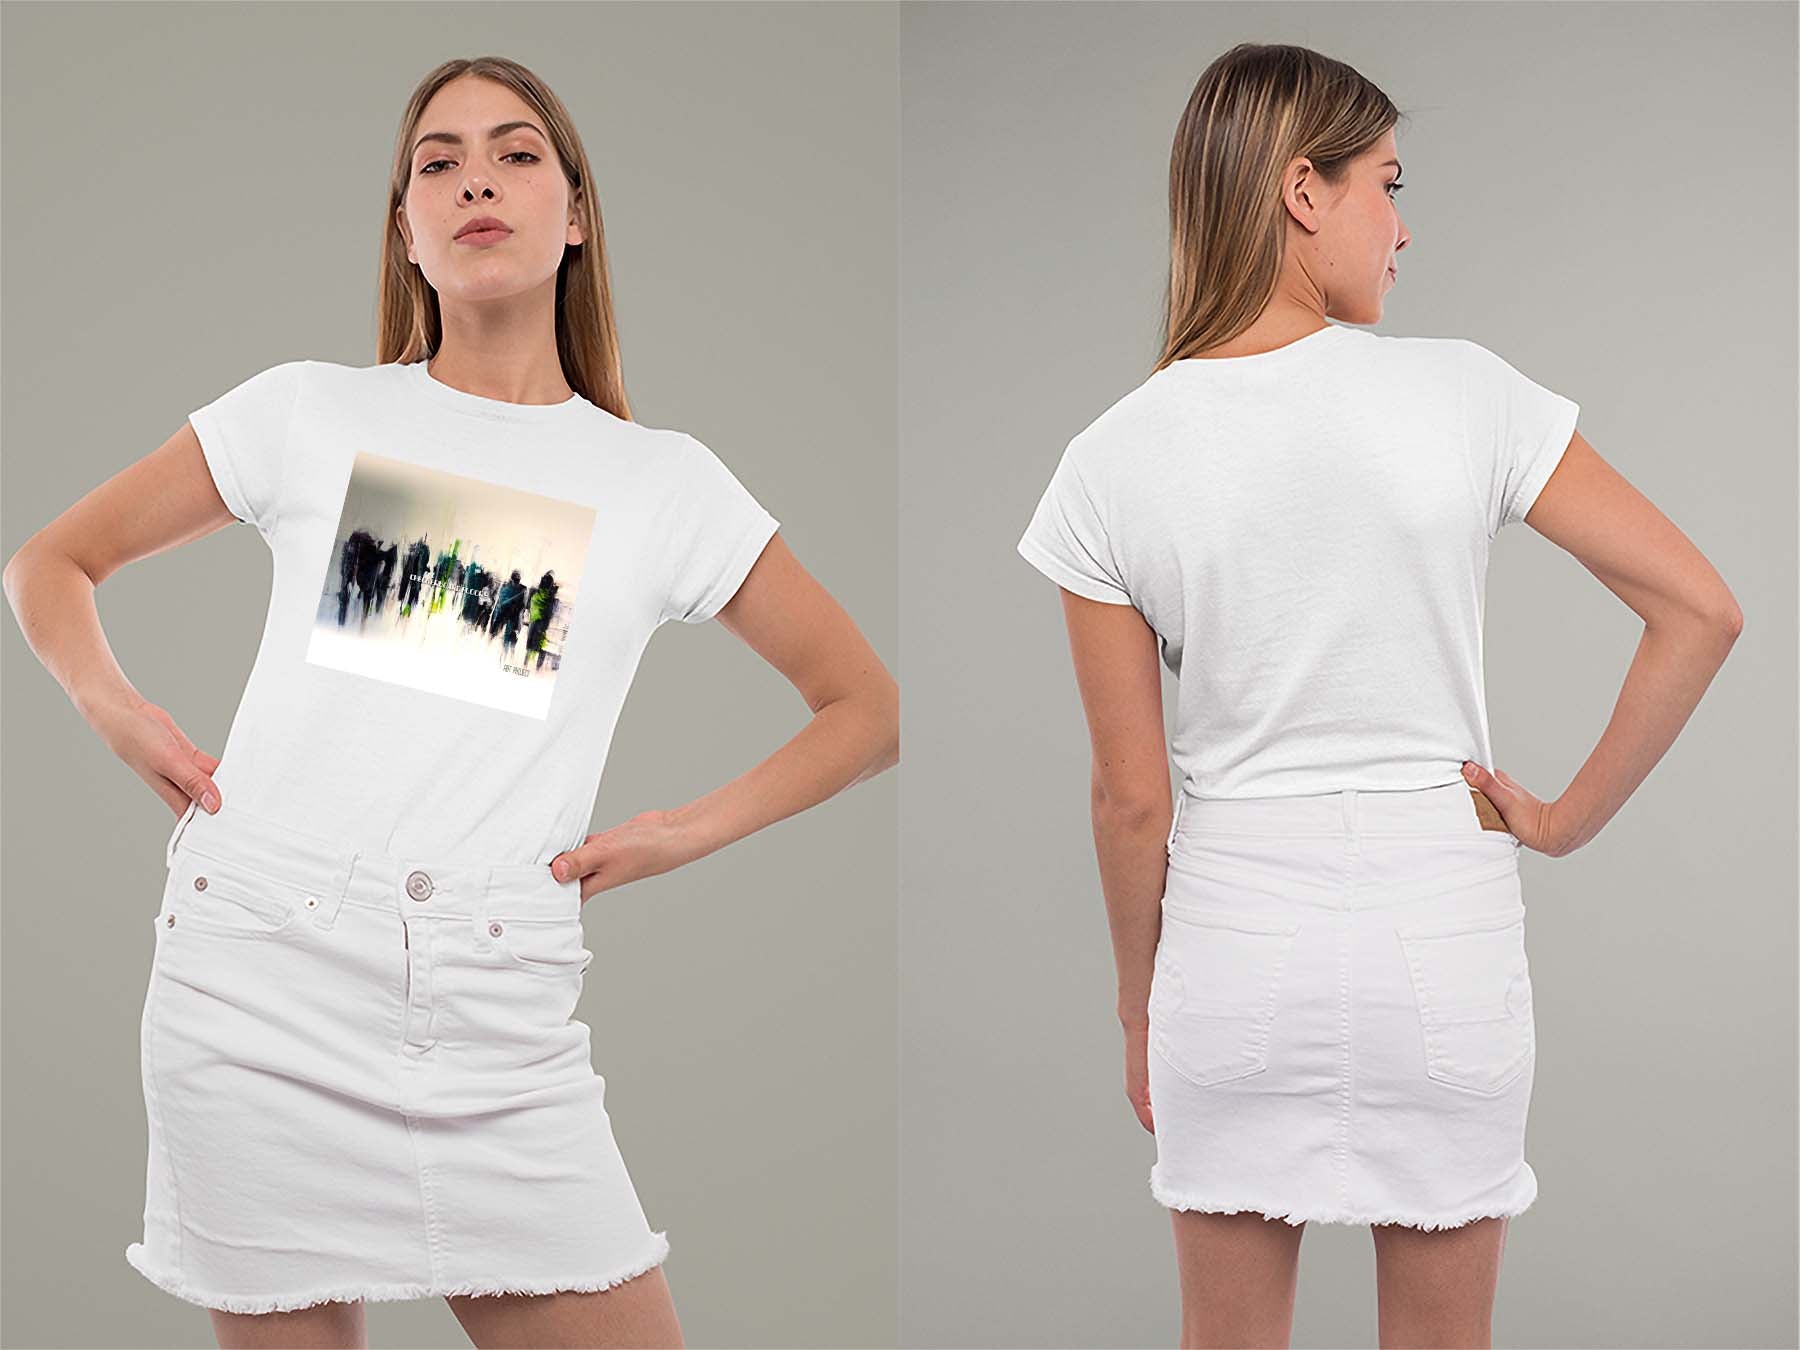 Art Project Ladies Crew (Round) Neck Shirt Small White